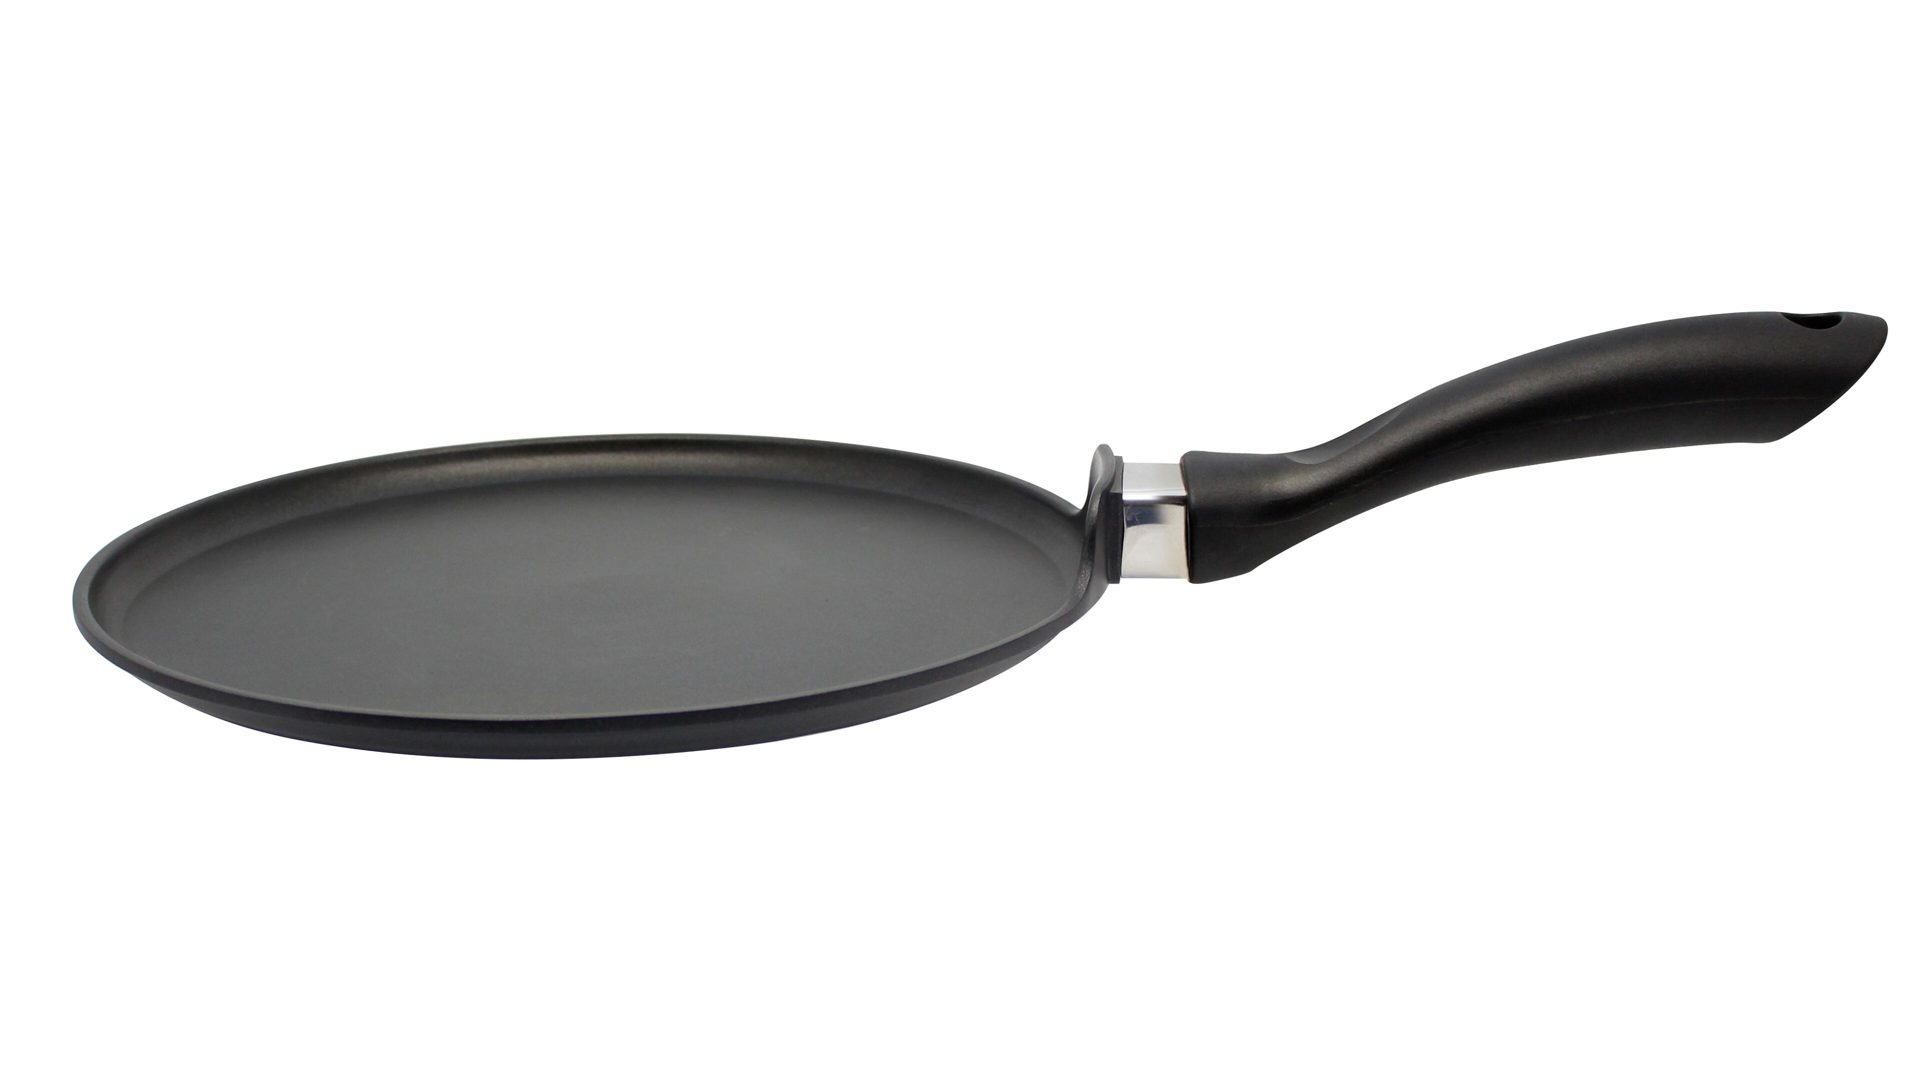 Pfanne Elo® aus Metall in Schwarz ELO® Crepes-Pfanne Alucast Aluguss – Durchmesser ca. 28 cm